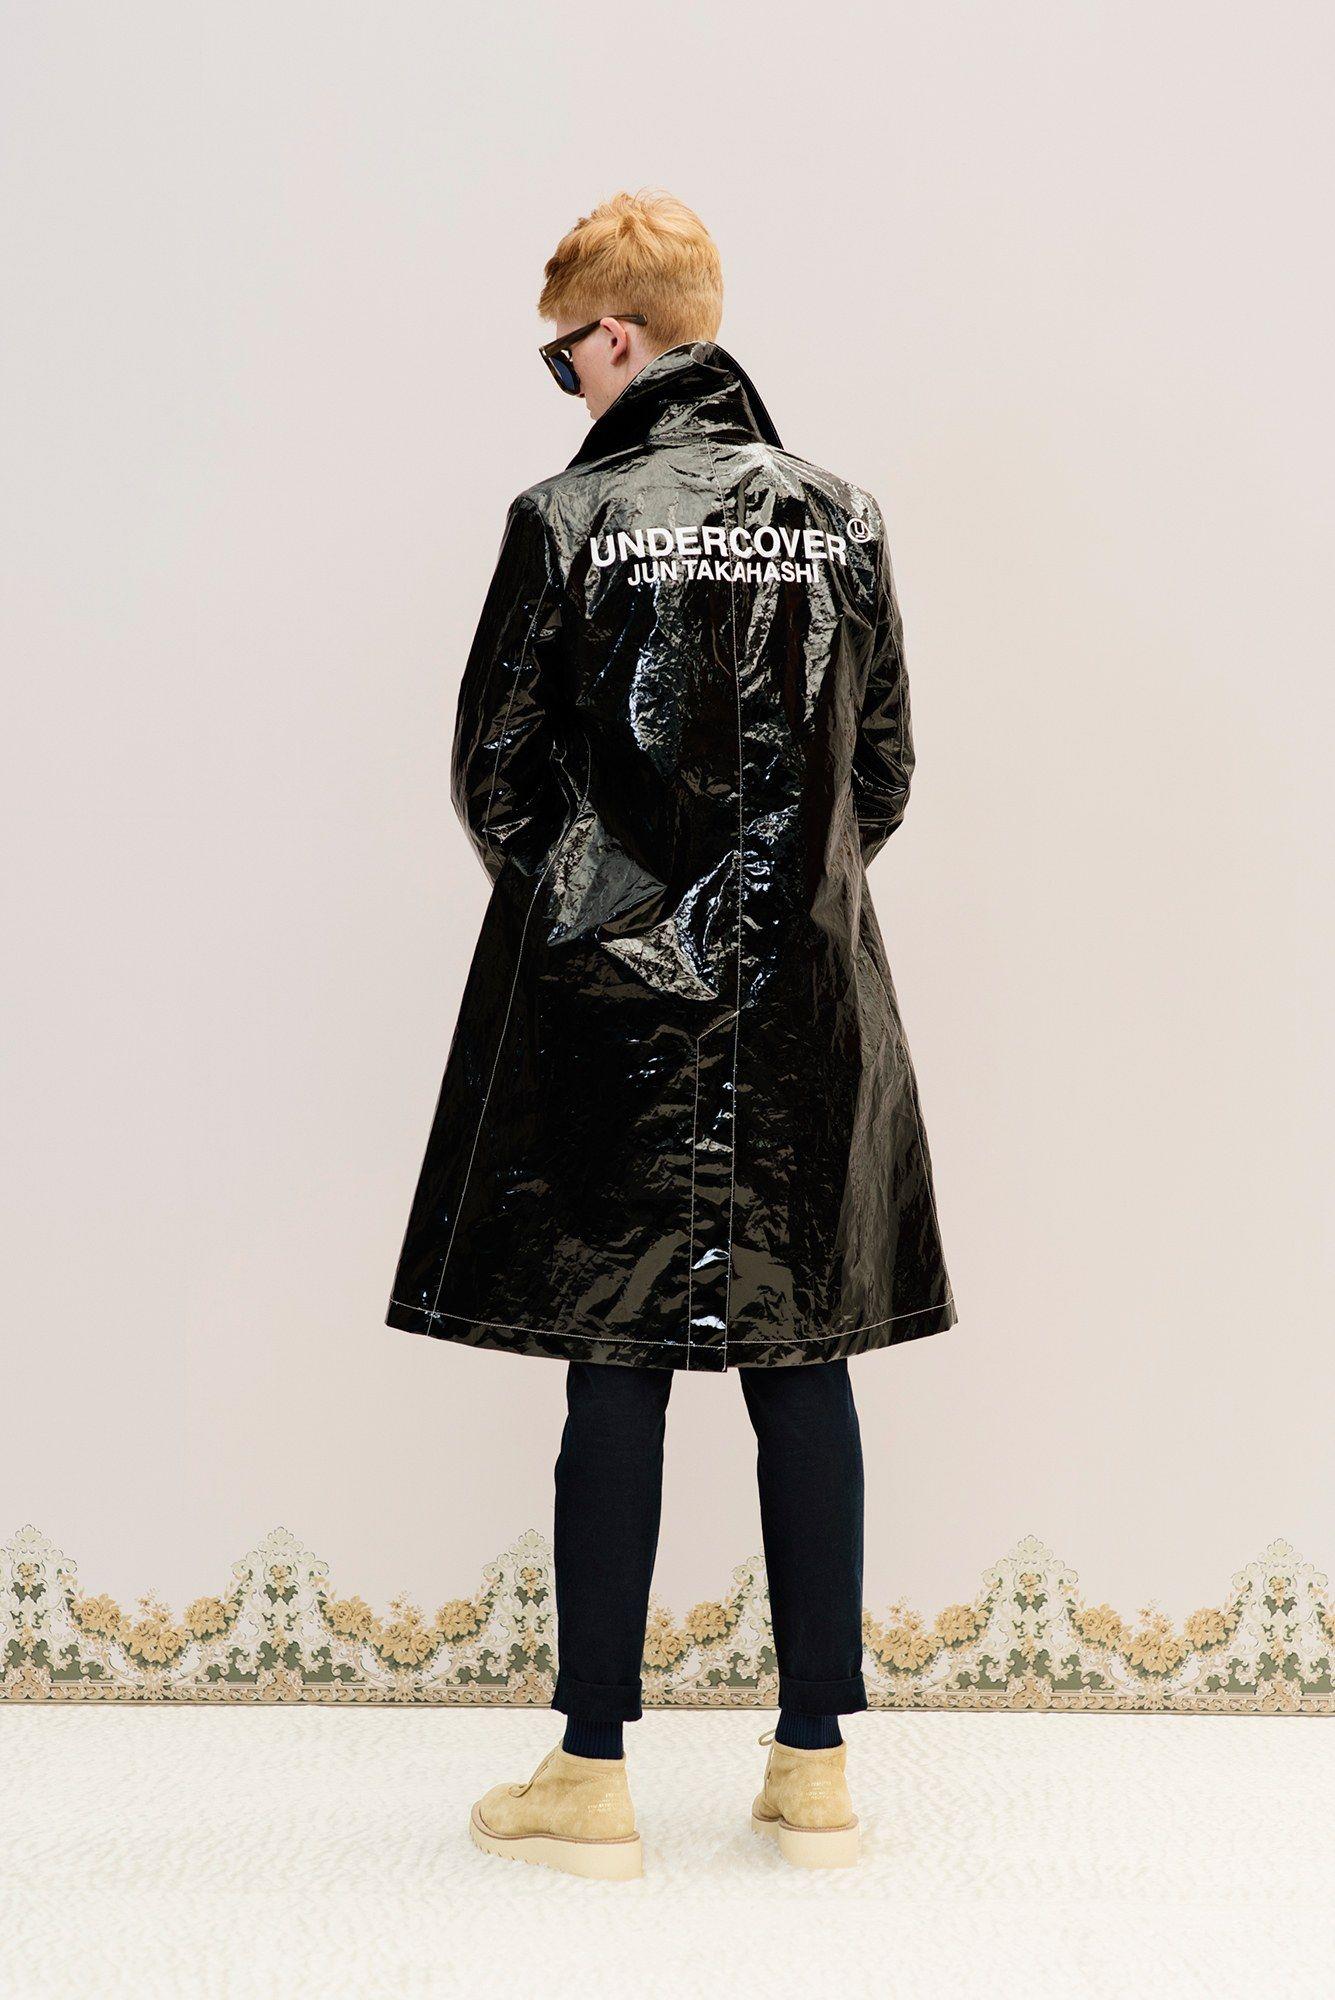 Jun Takahashi Undercover Logo - Undercover Fall 2016 Menswear Collection - Vogue